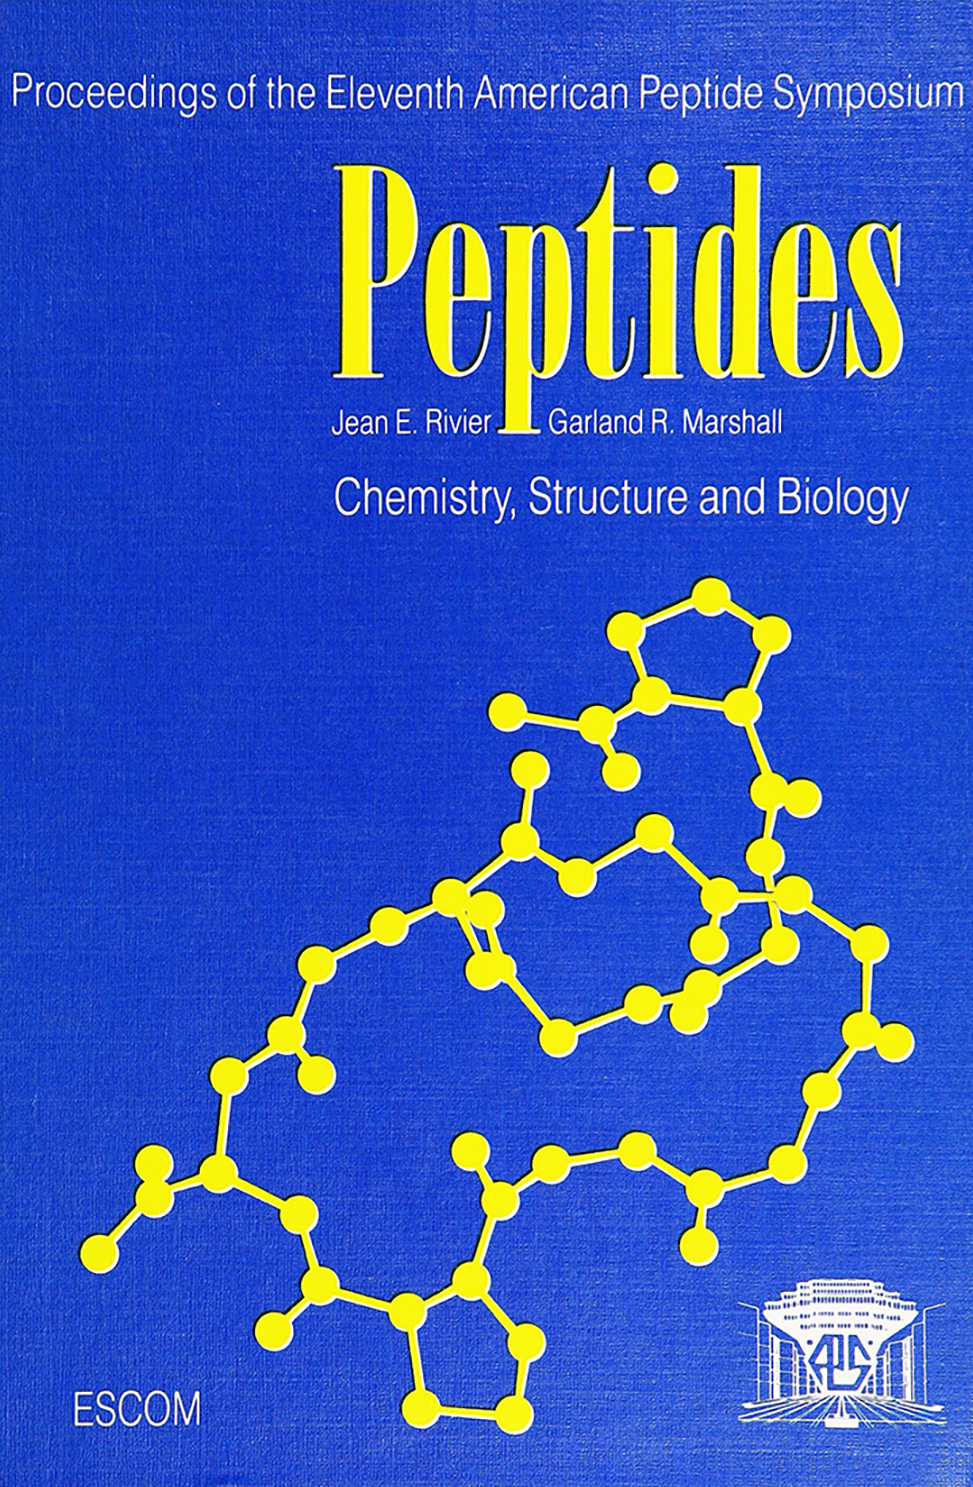 1989 Proceedings Cover